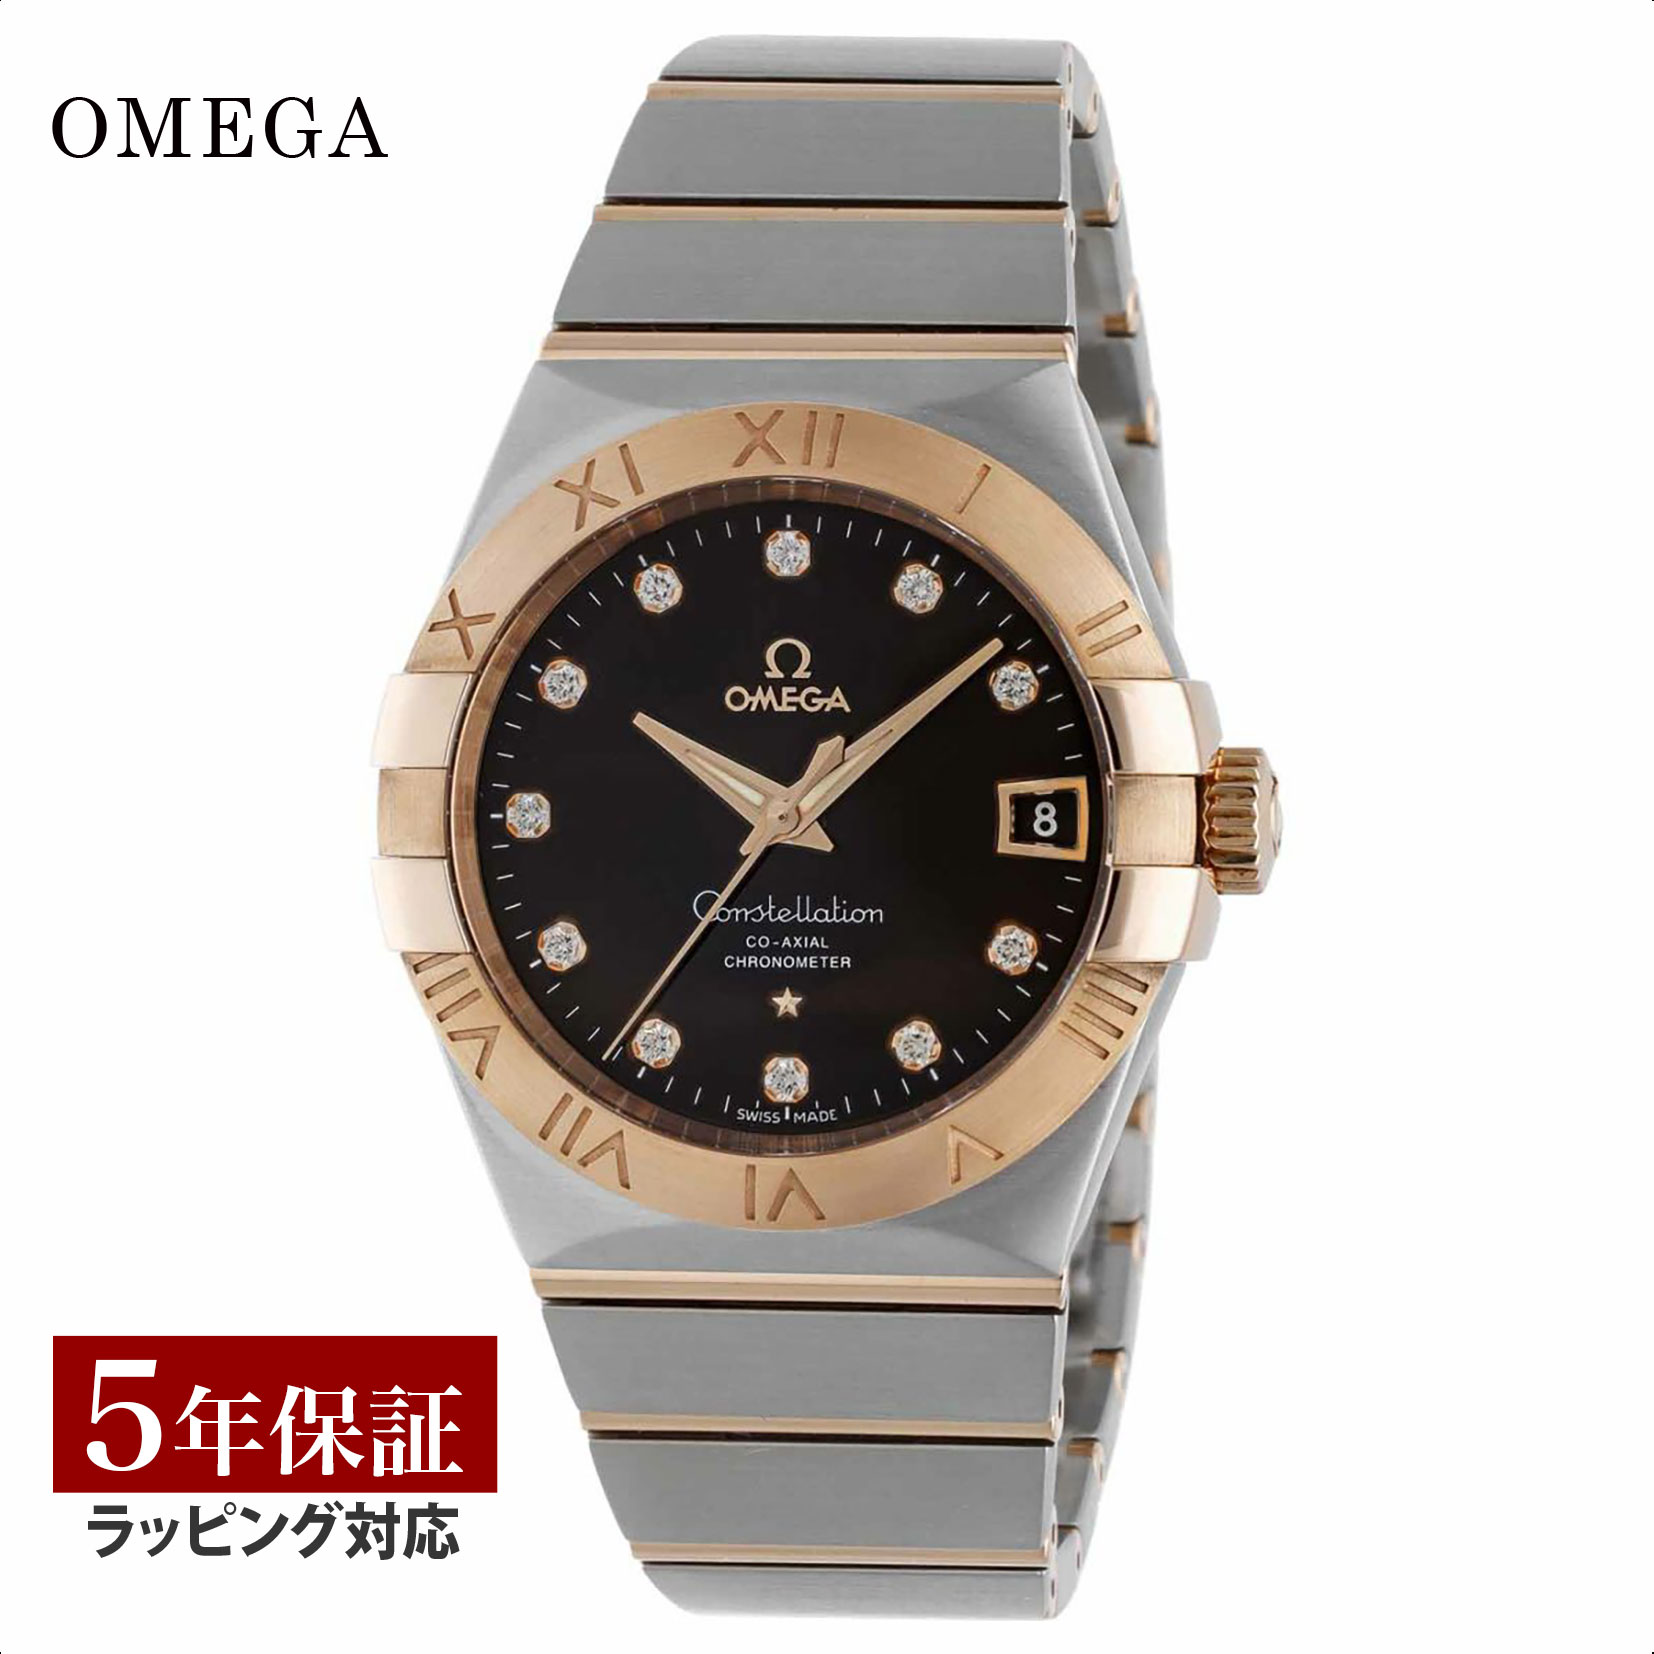 OMEGA オメガ コンステレーション コーアクシャル自動巻 メンズ ブラウン 123.20.38.21.63.001 時計 腕時計 高級腕時計 ブランド